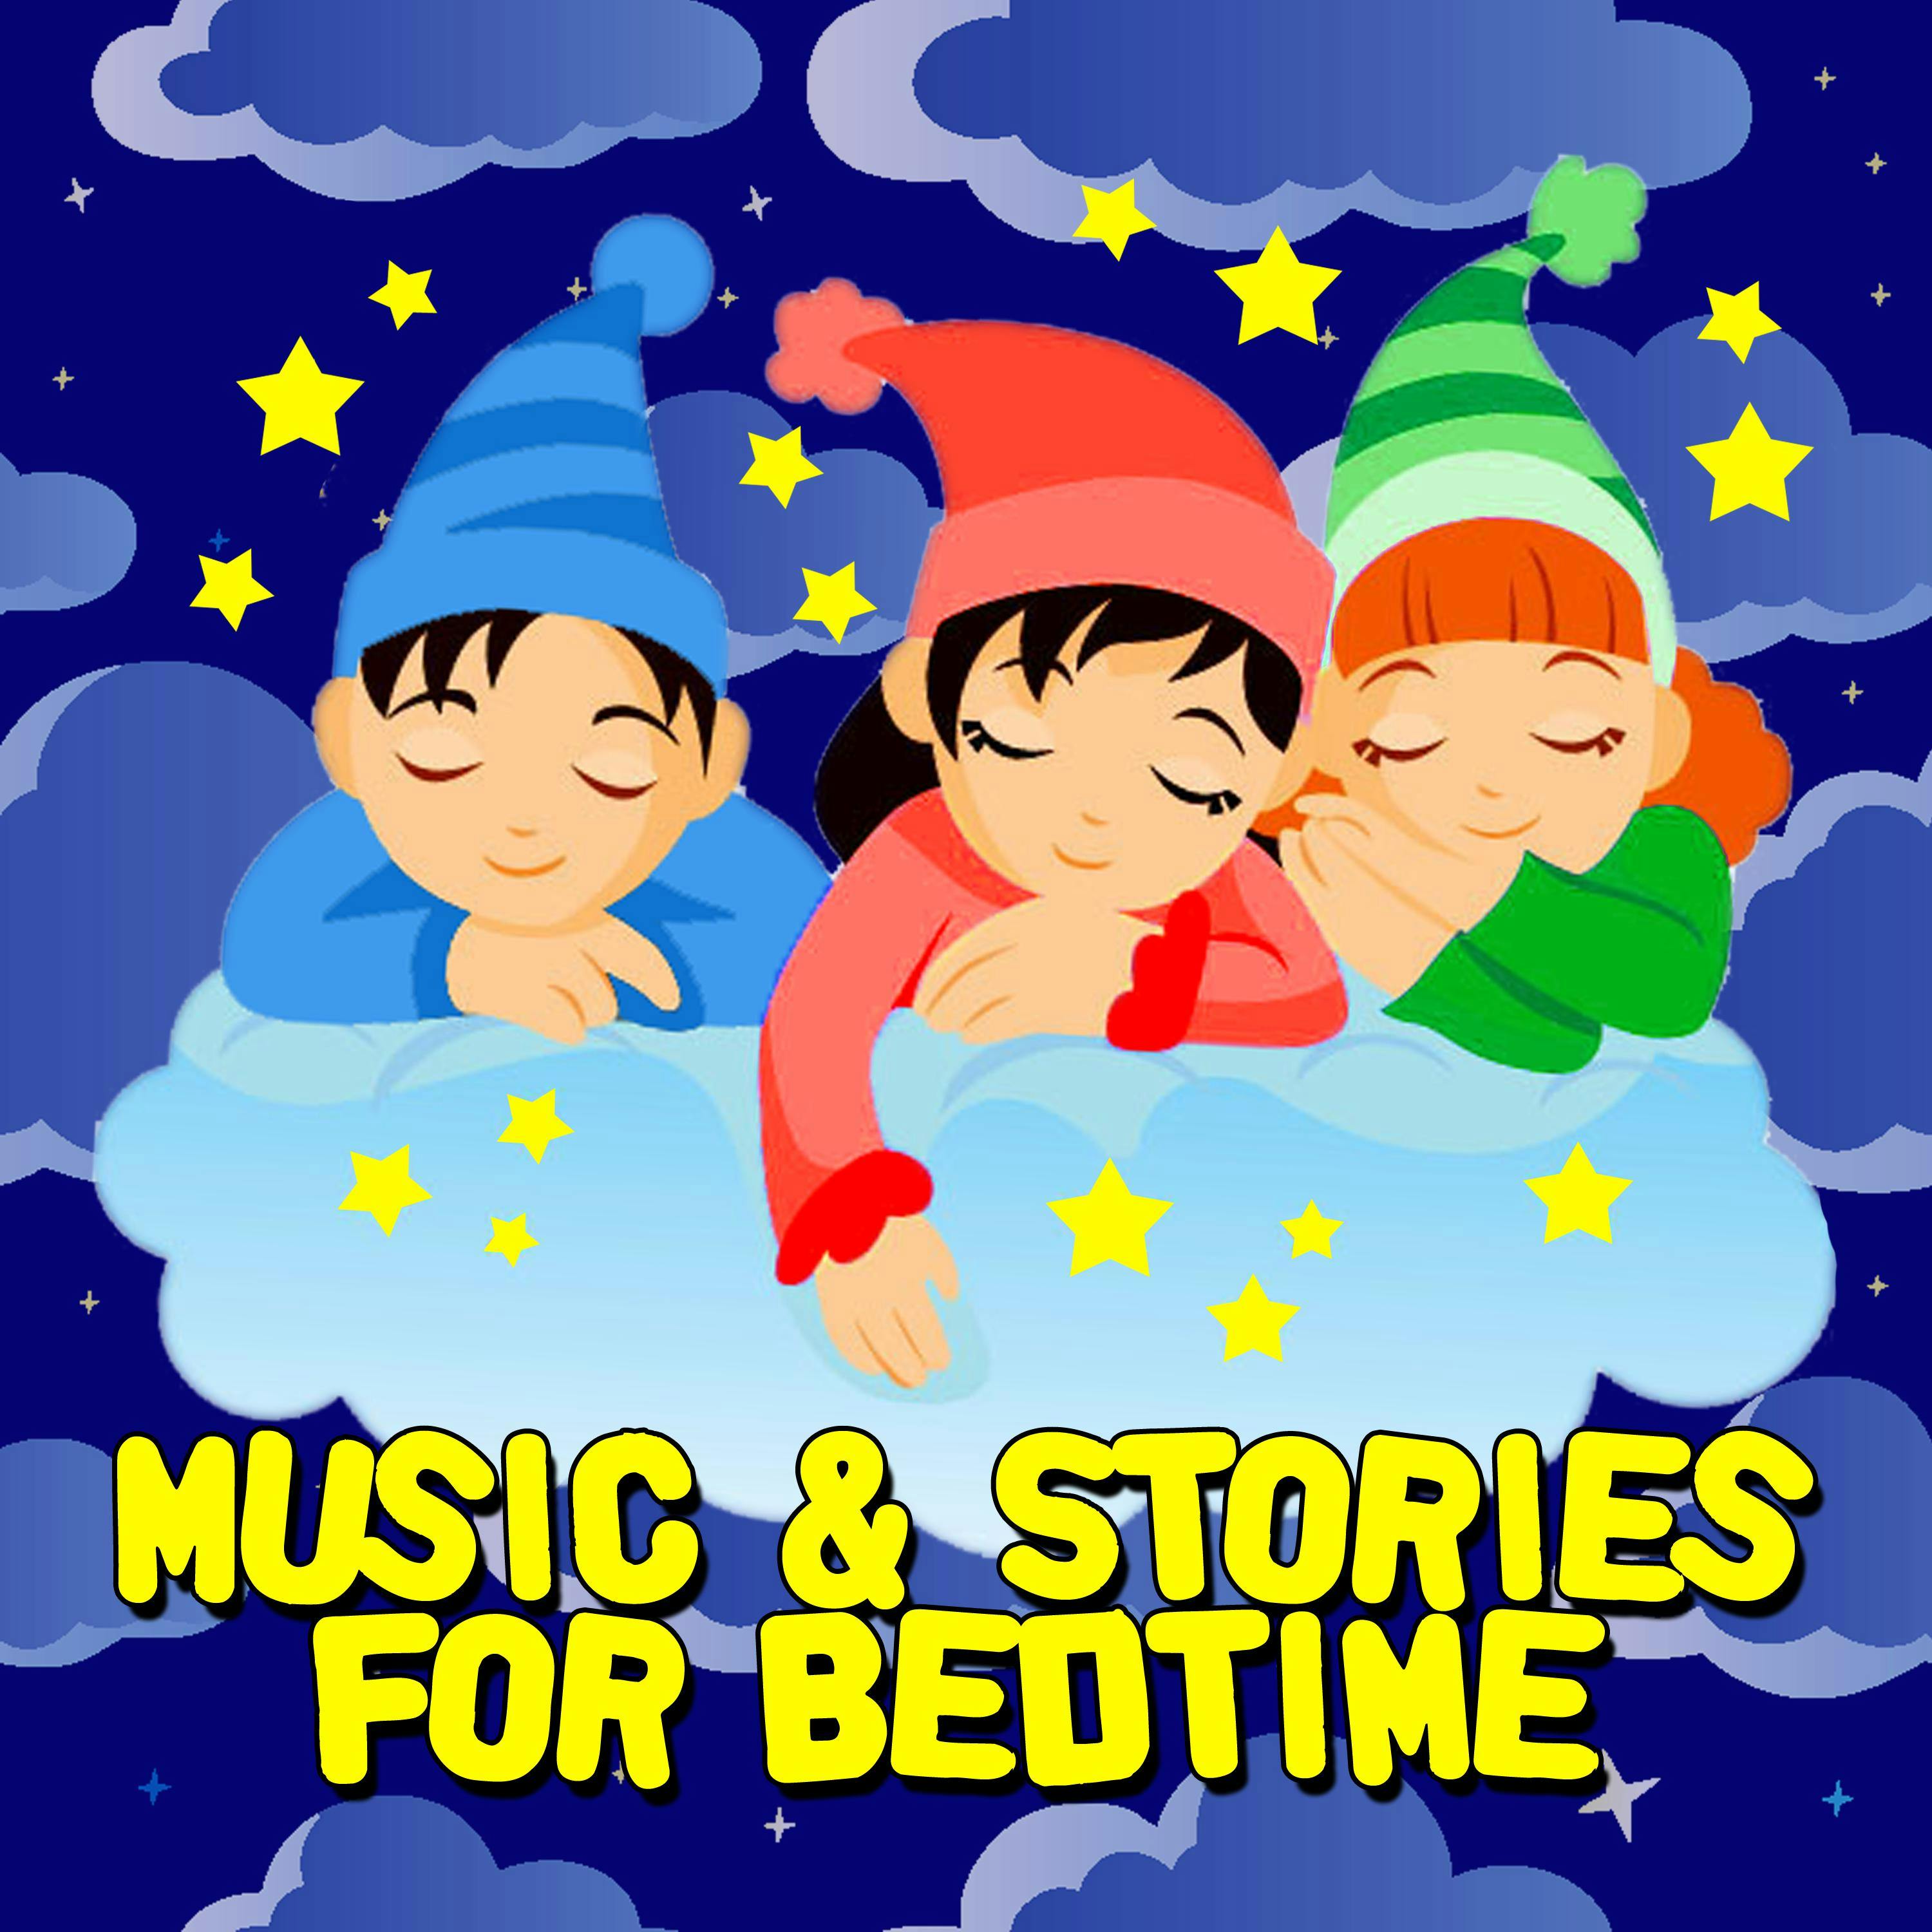 Music & Stories for Bedtime - Roger Wade, Hans Christian Andersen, Traditional